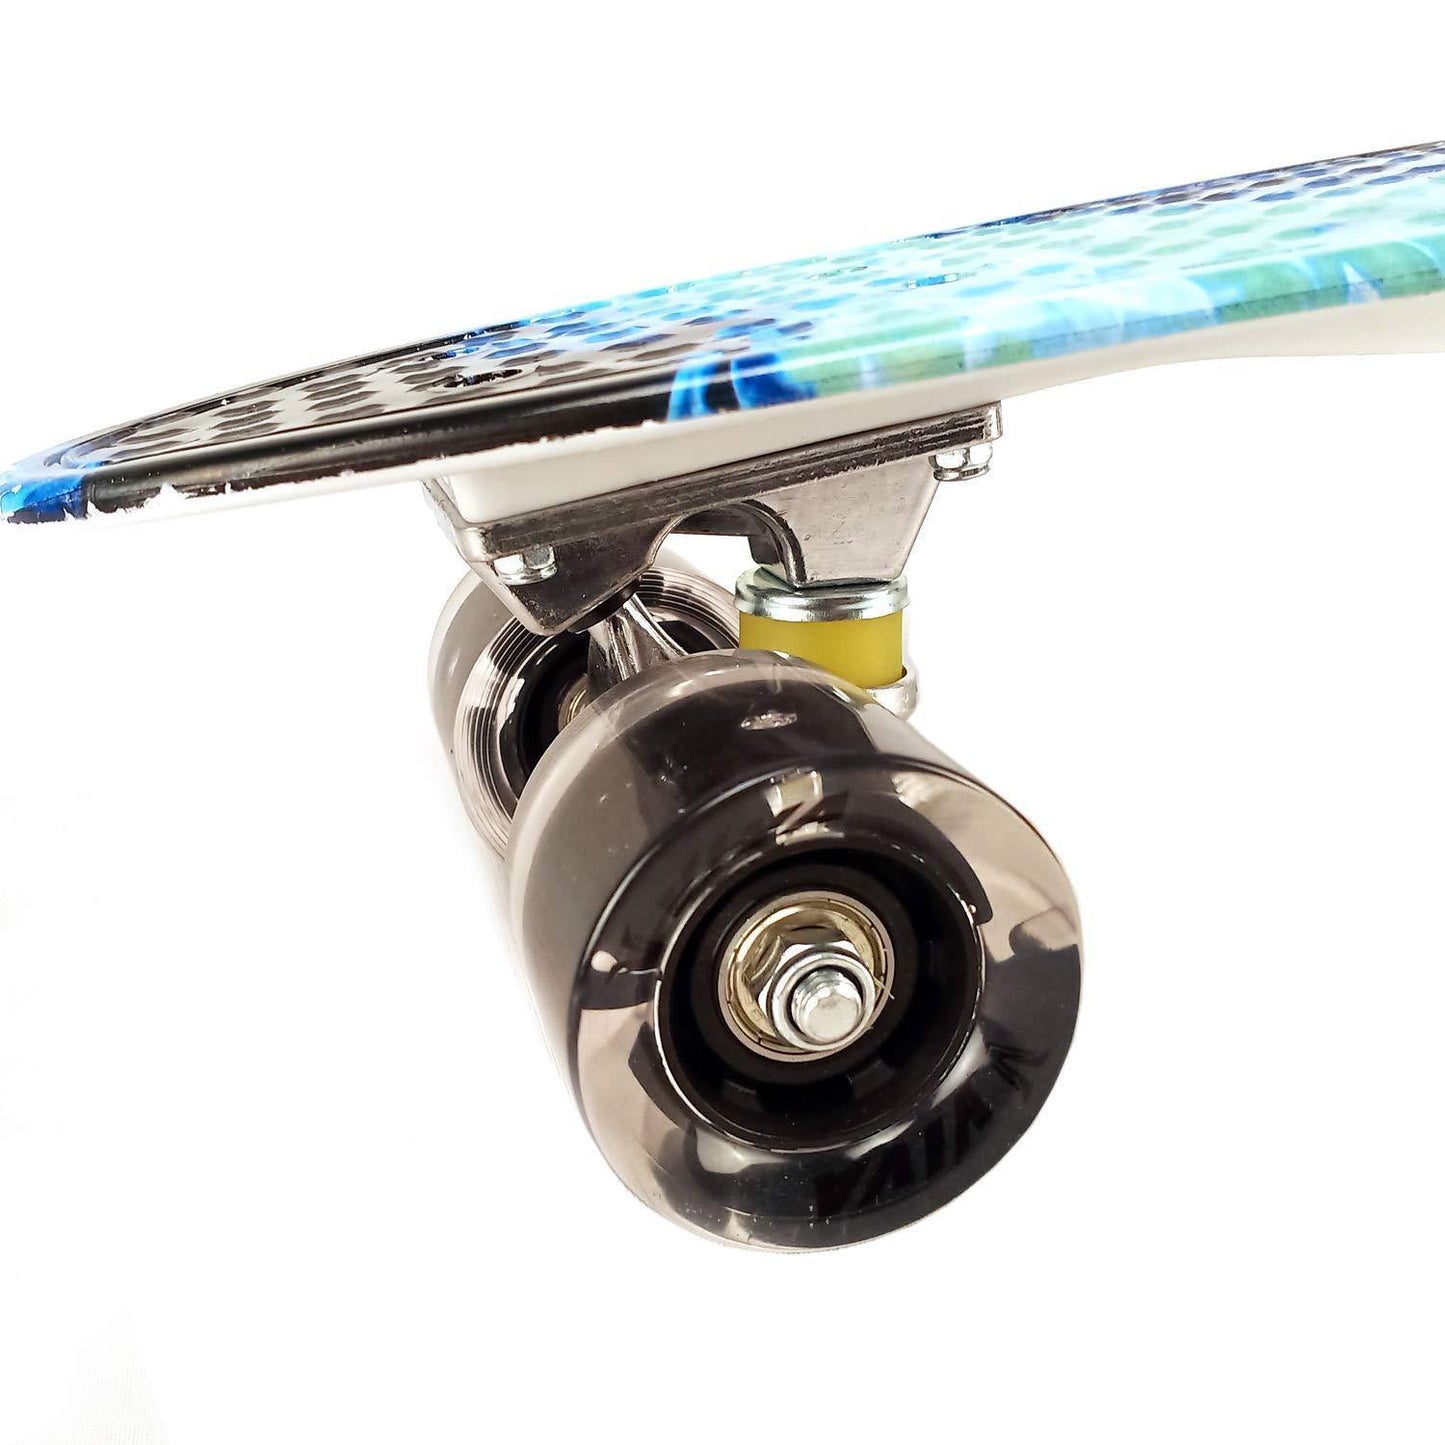 Viva Skateboard with Flashlight Wheels - Junior - Vibrant Color (22 x 6 Inches) - Best Price online Prokicksports.com